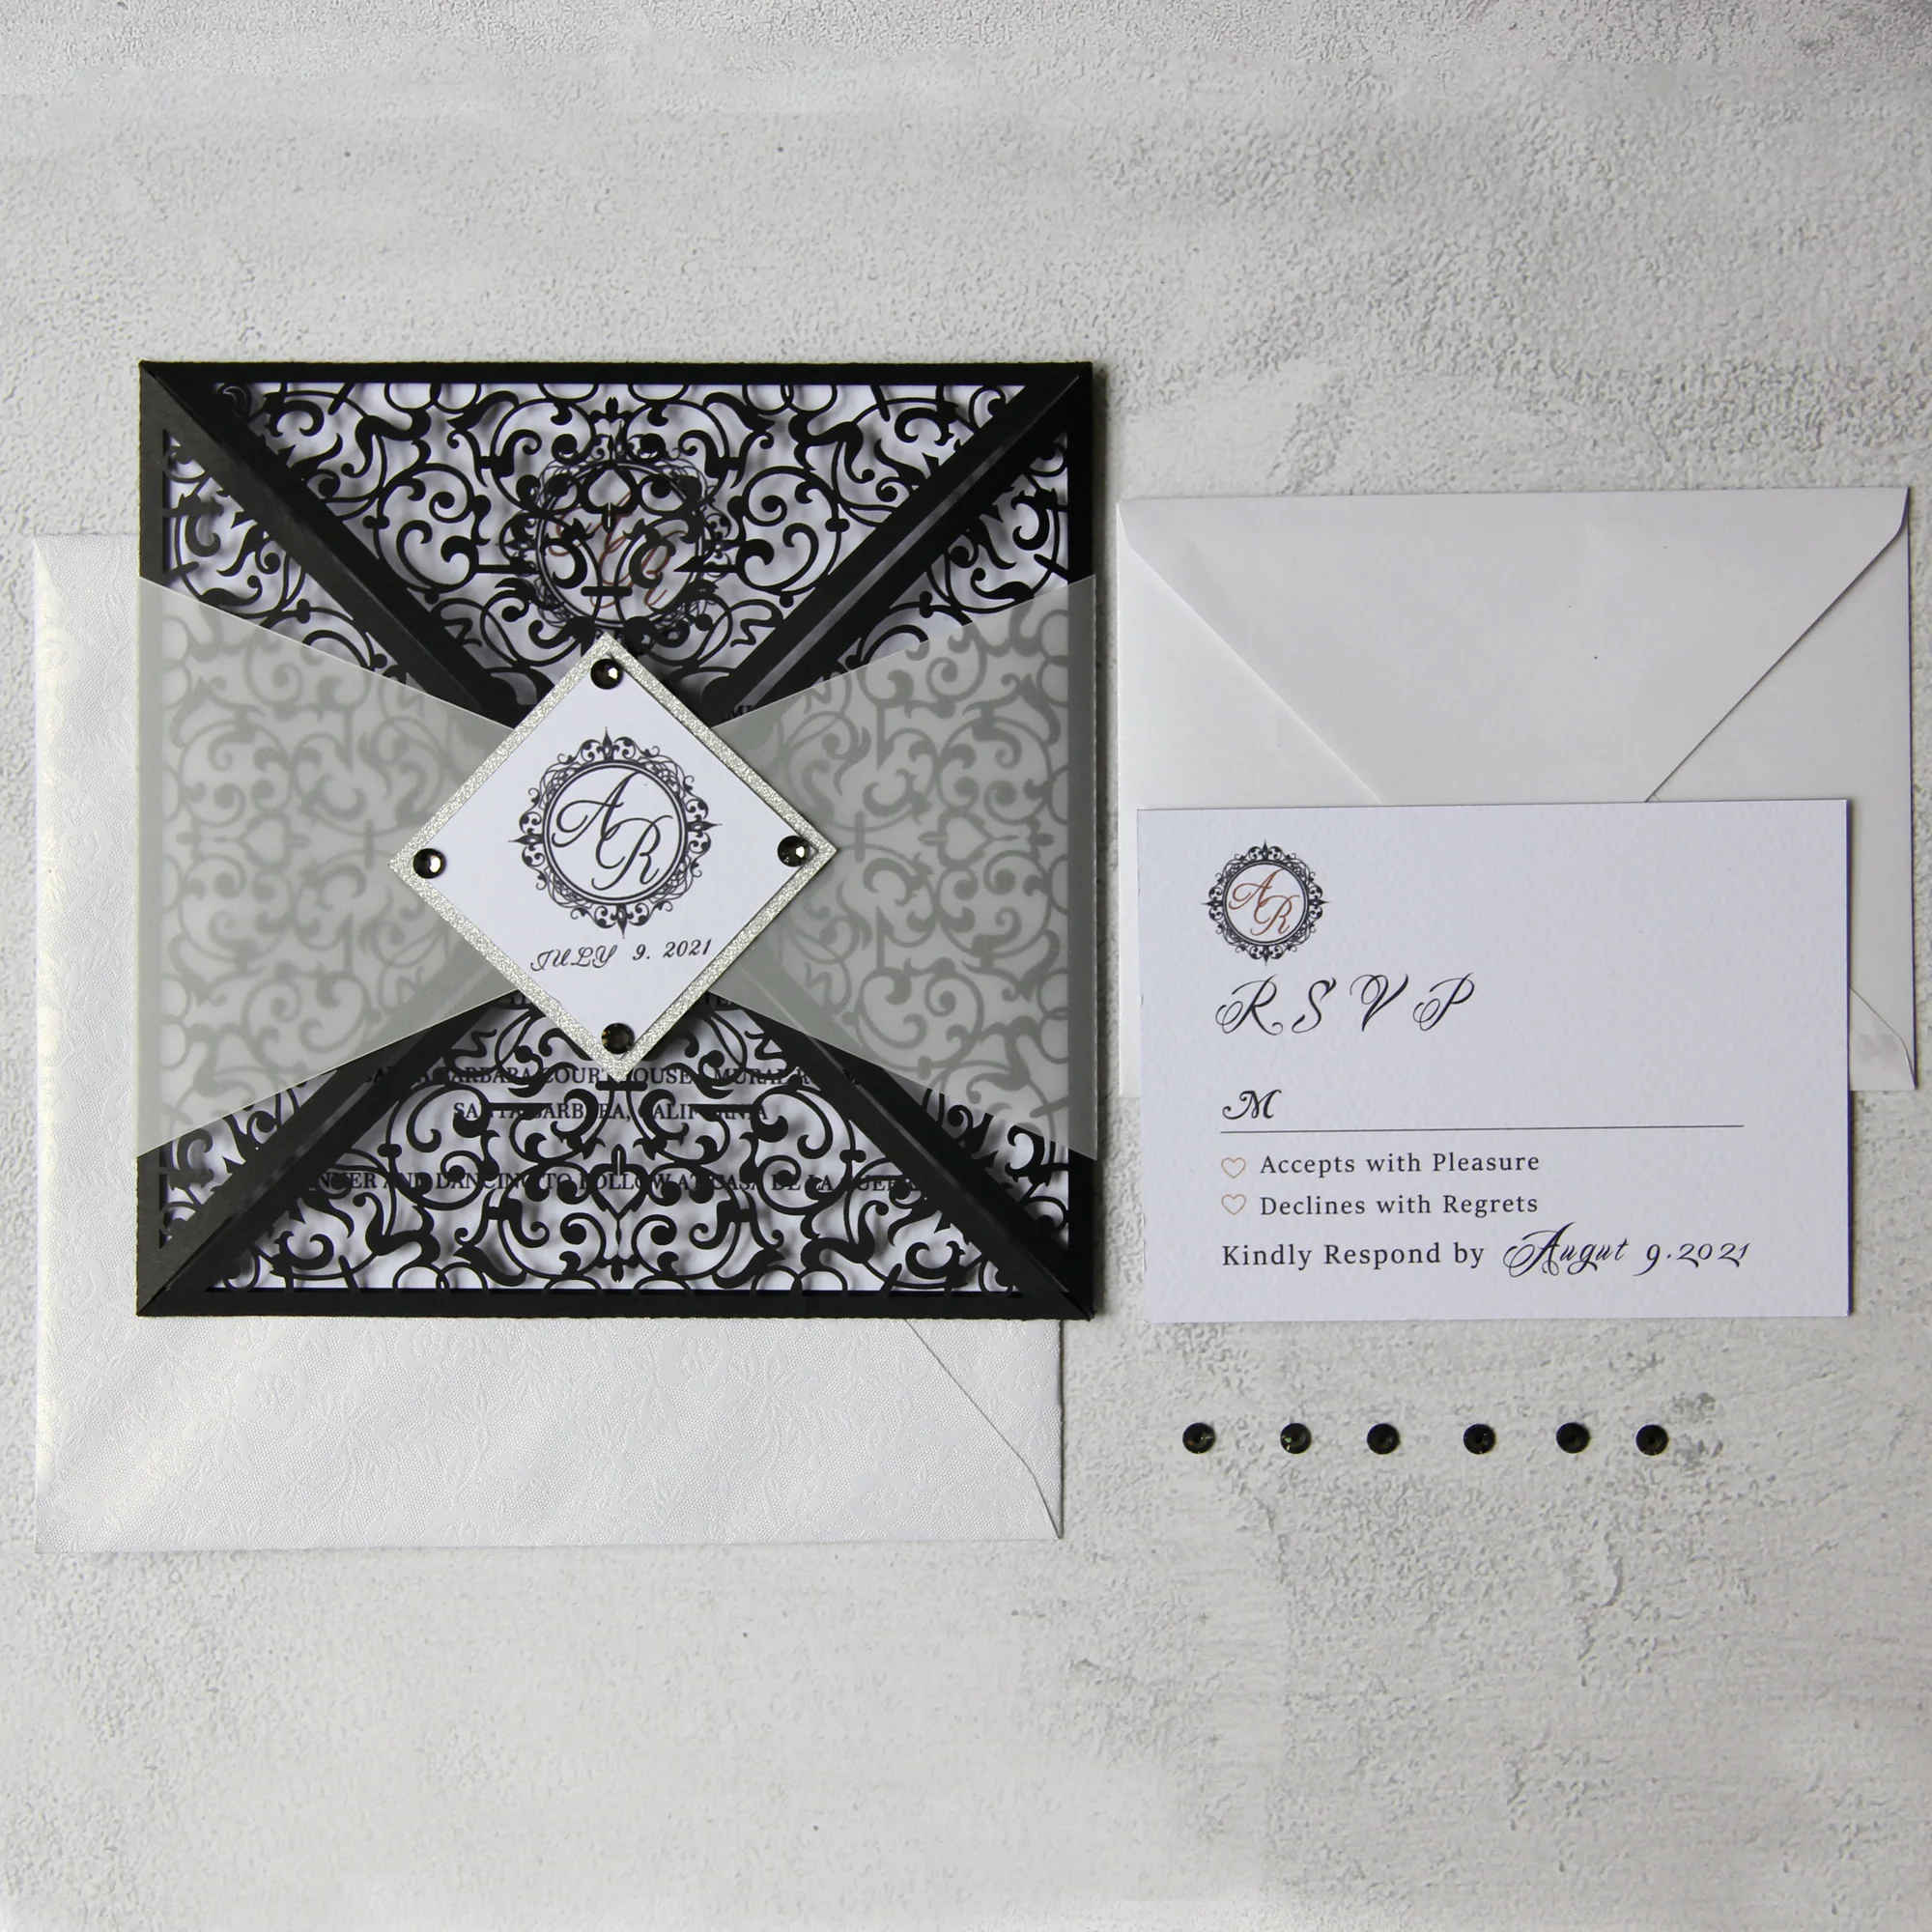 Print custom invitations Elegant Square Laser Cut Wedding Invitations Cards Wedding Decoration Party Supplies images - 6